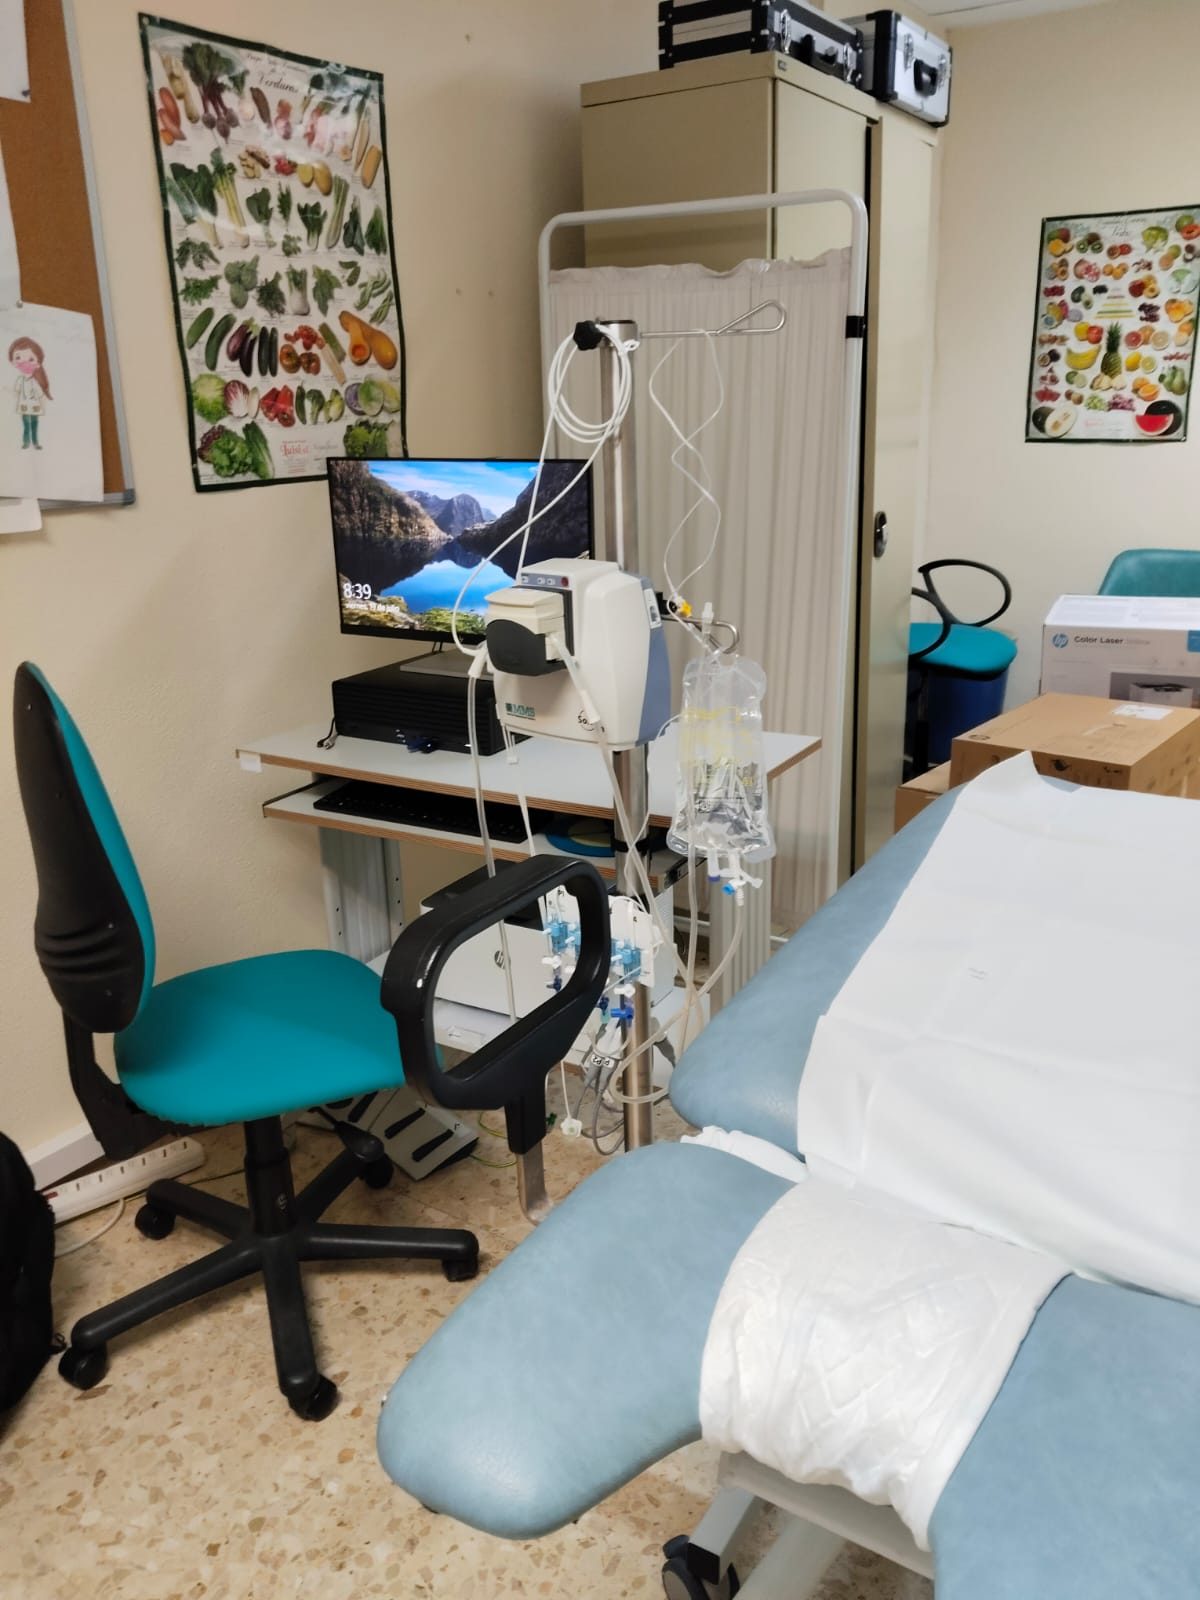 Image 1 of article El Hospital Materno Infantil de Badajoz, centro de referencia de Extremadura en pruebas urodinámicas